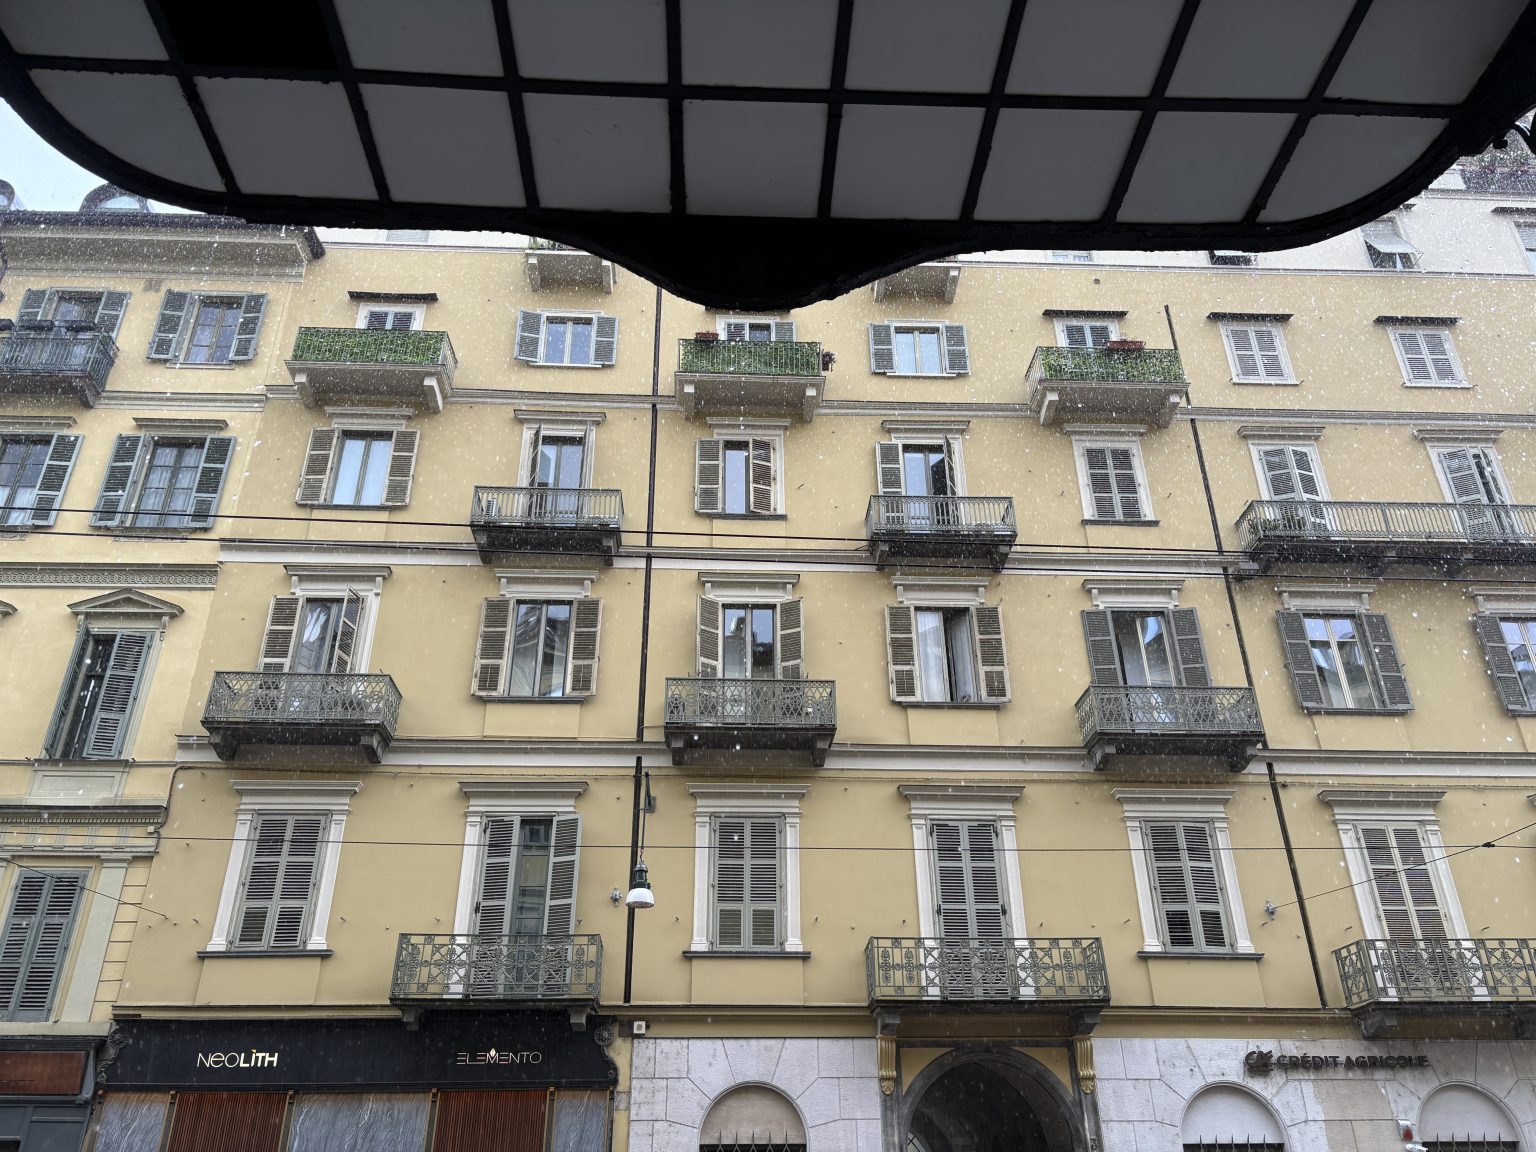 Apartment windows in Torino Italy.